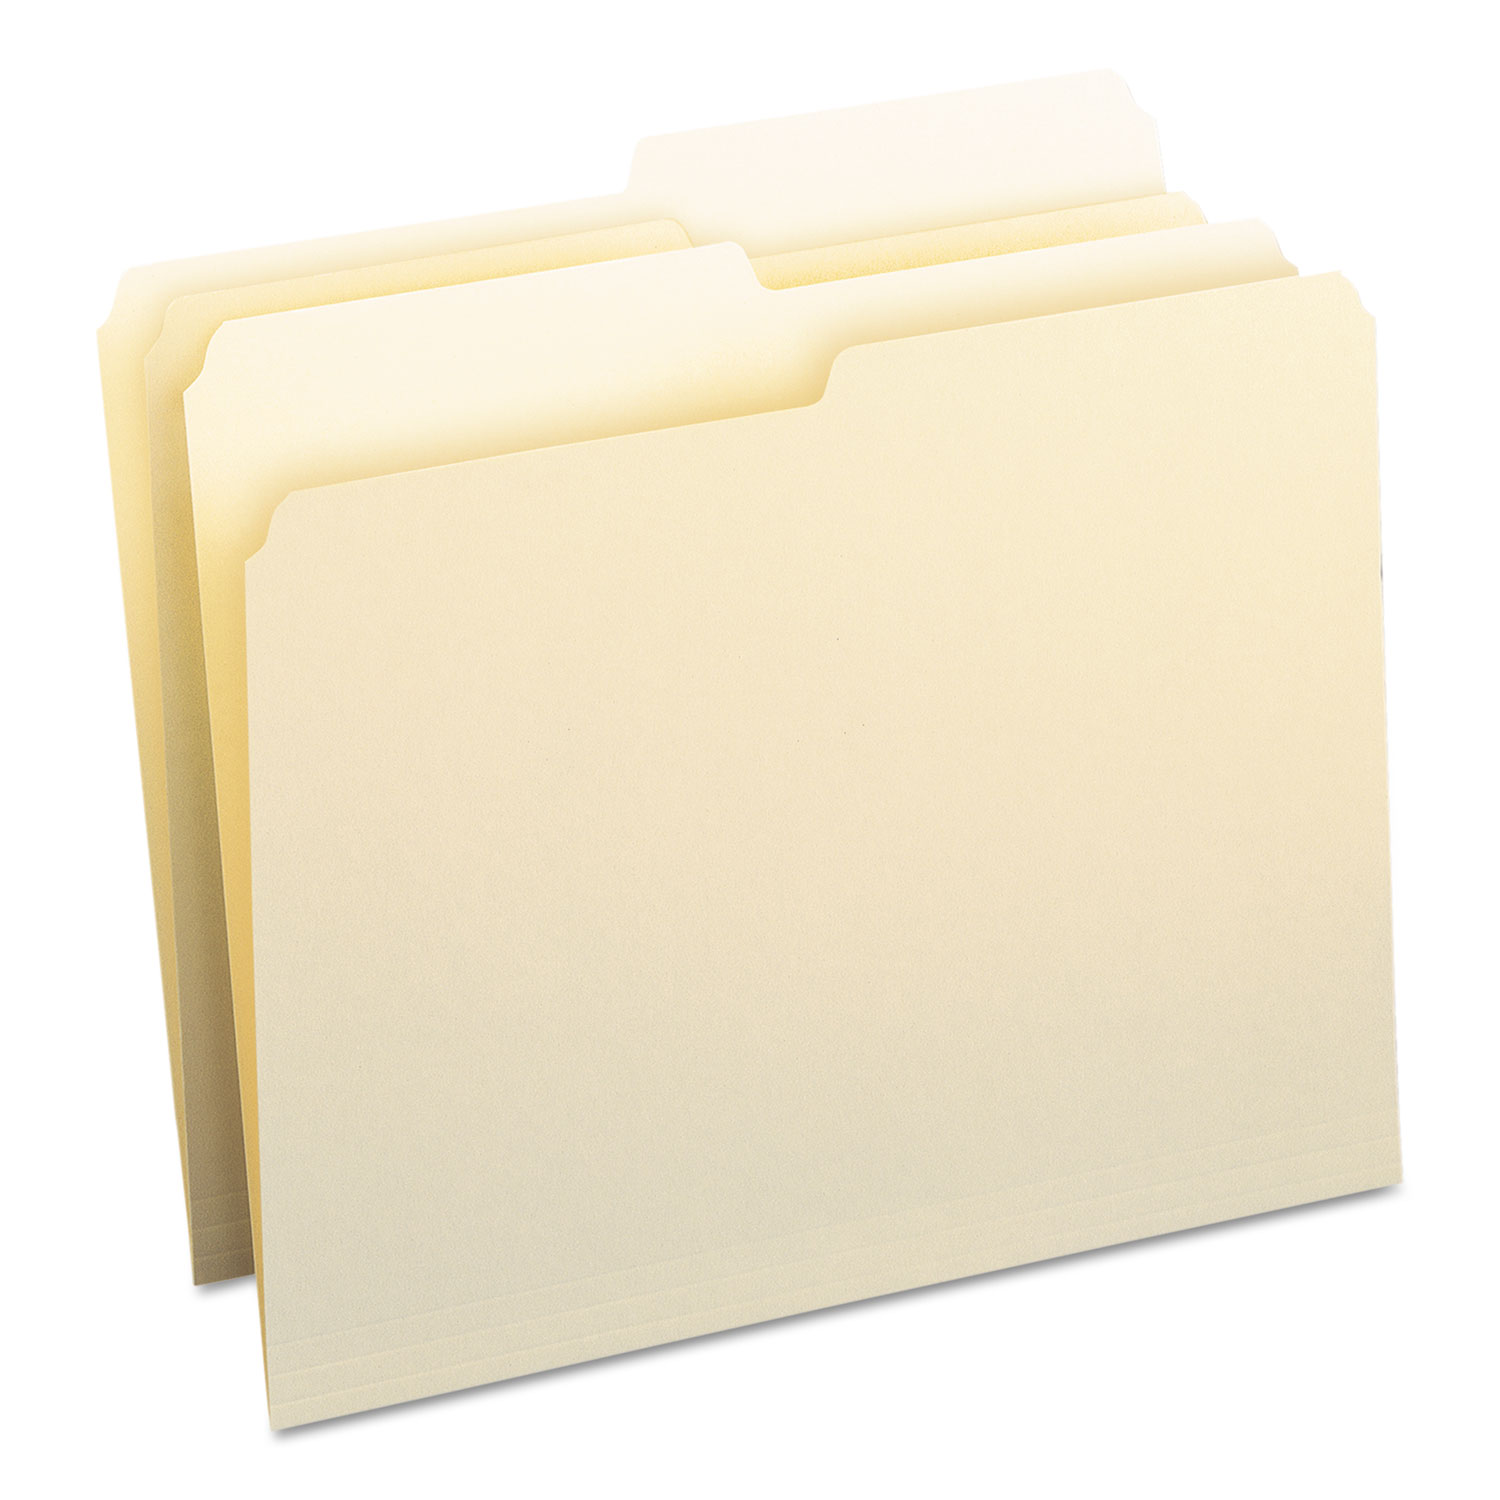  Smead 10320 Manila File Folders, 1/2-Cut Tabs, Letter Size, 100/Box (SMD10320) 